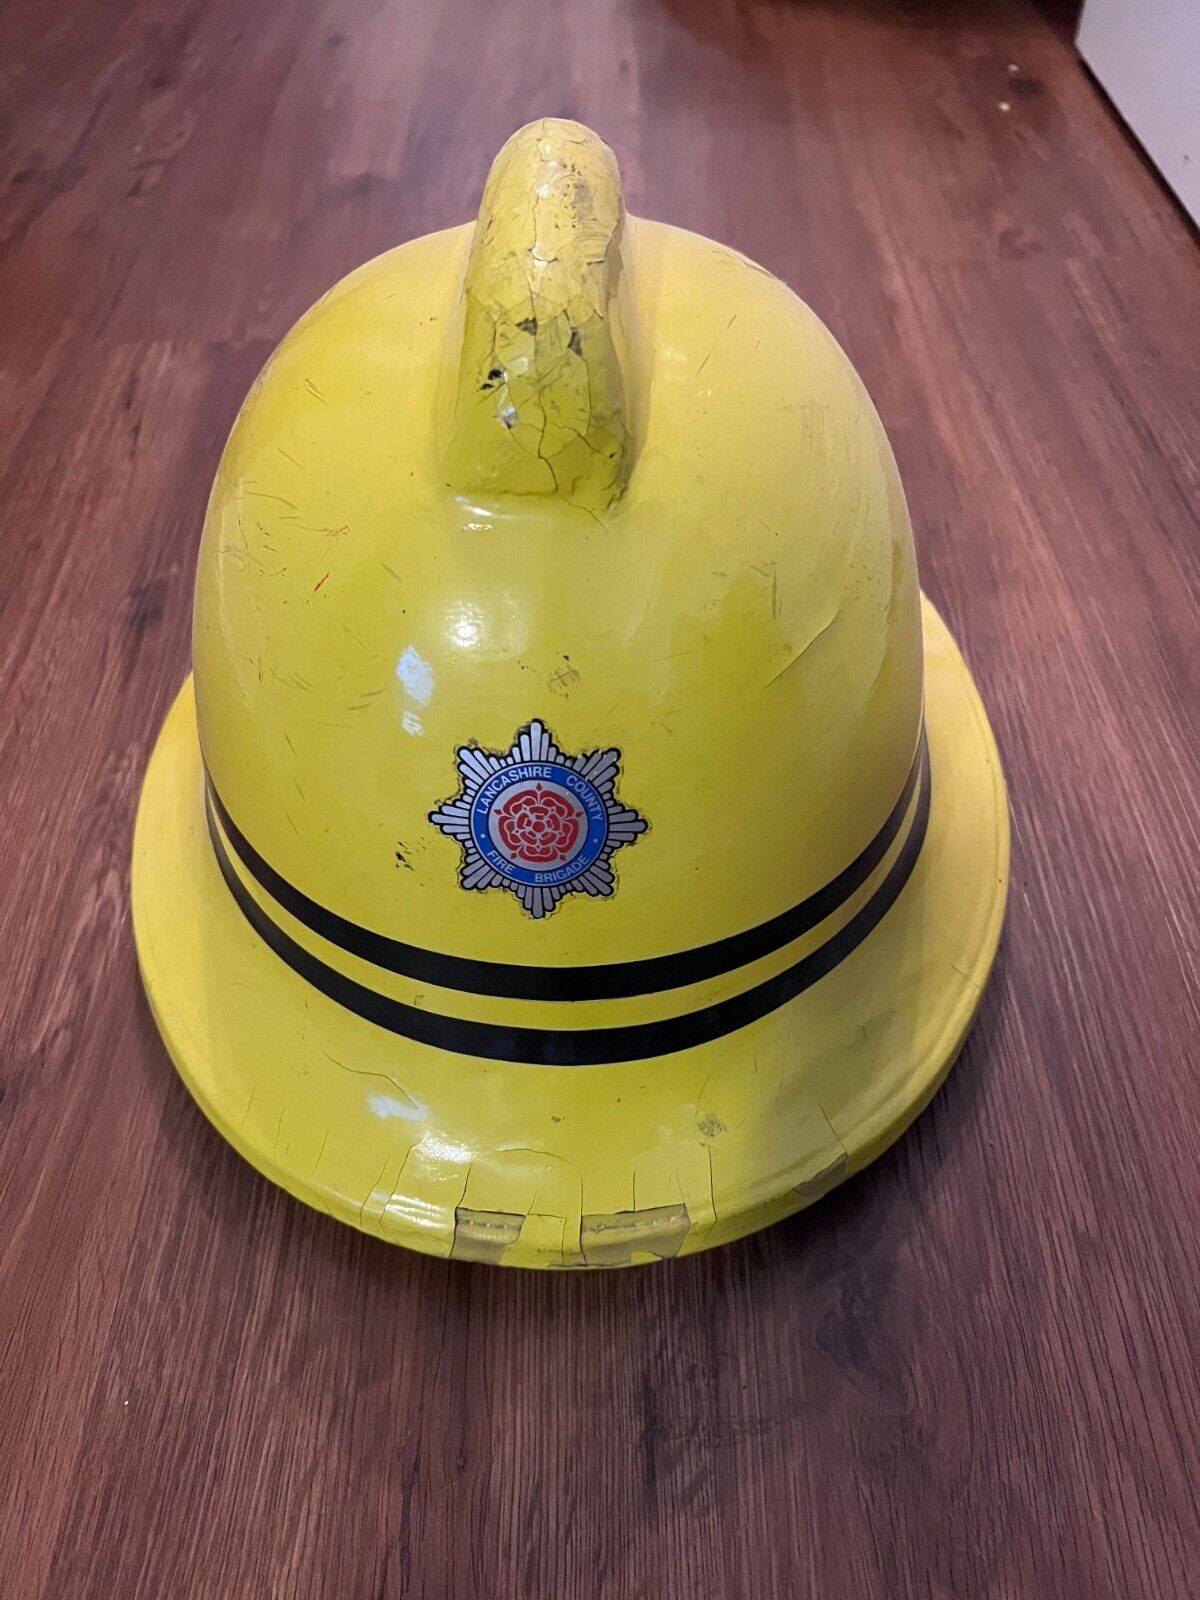 Anitique British Fire Helmet - Landcaster County Fire Brigade 1979